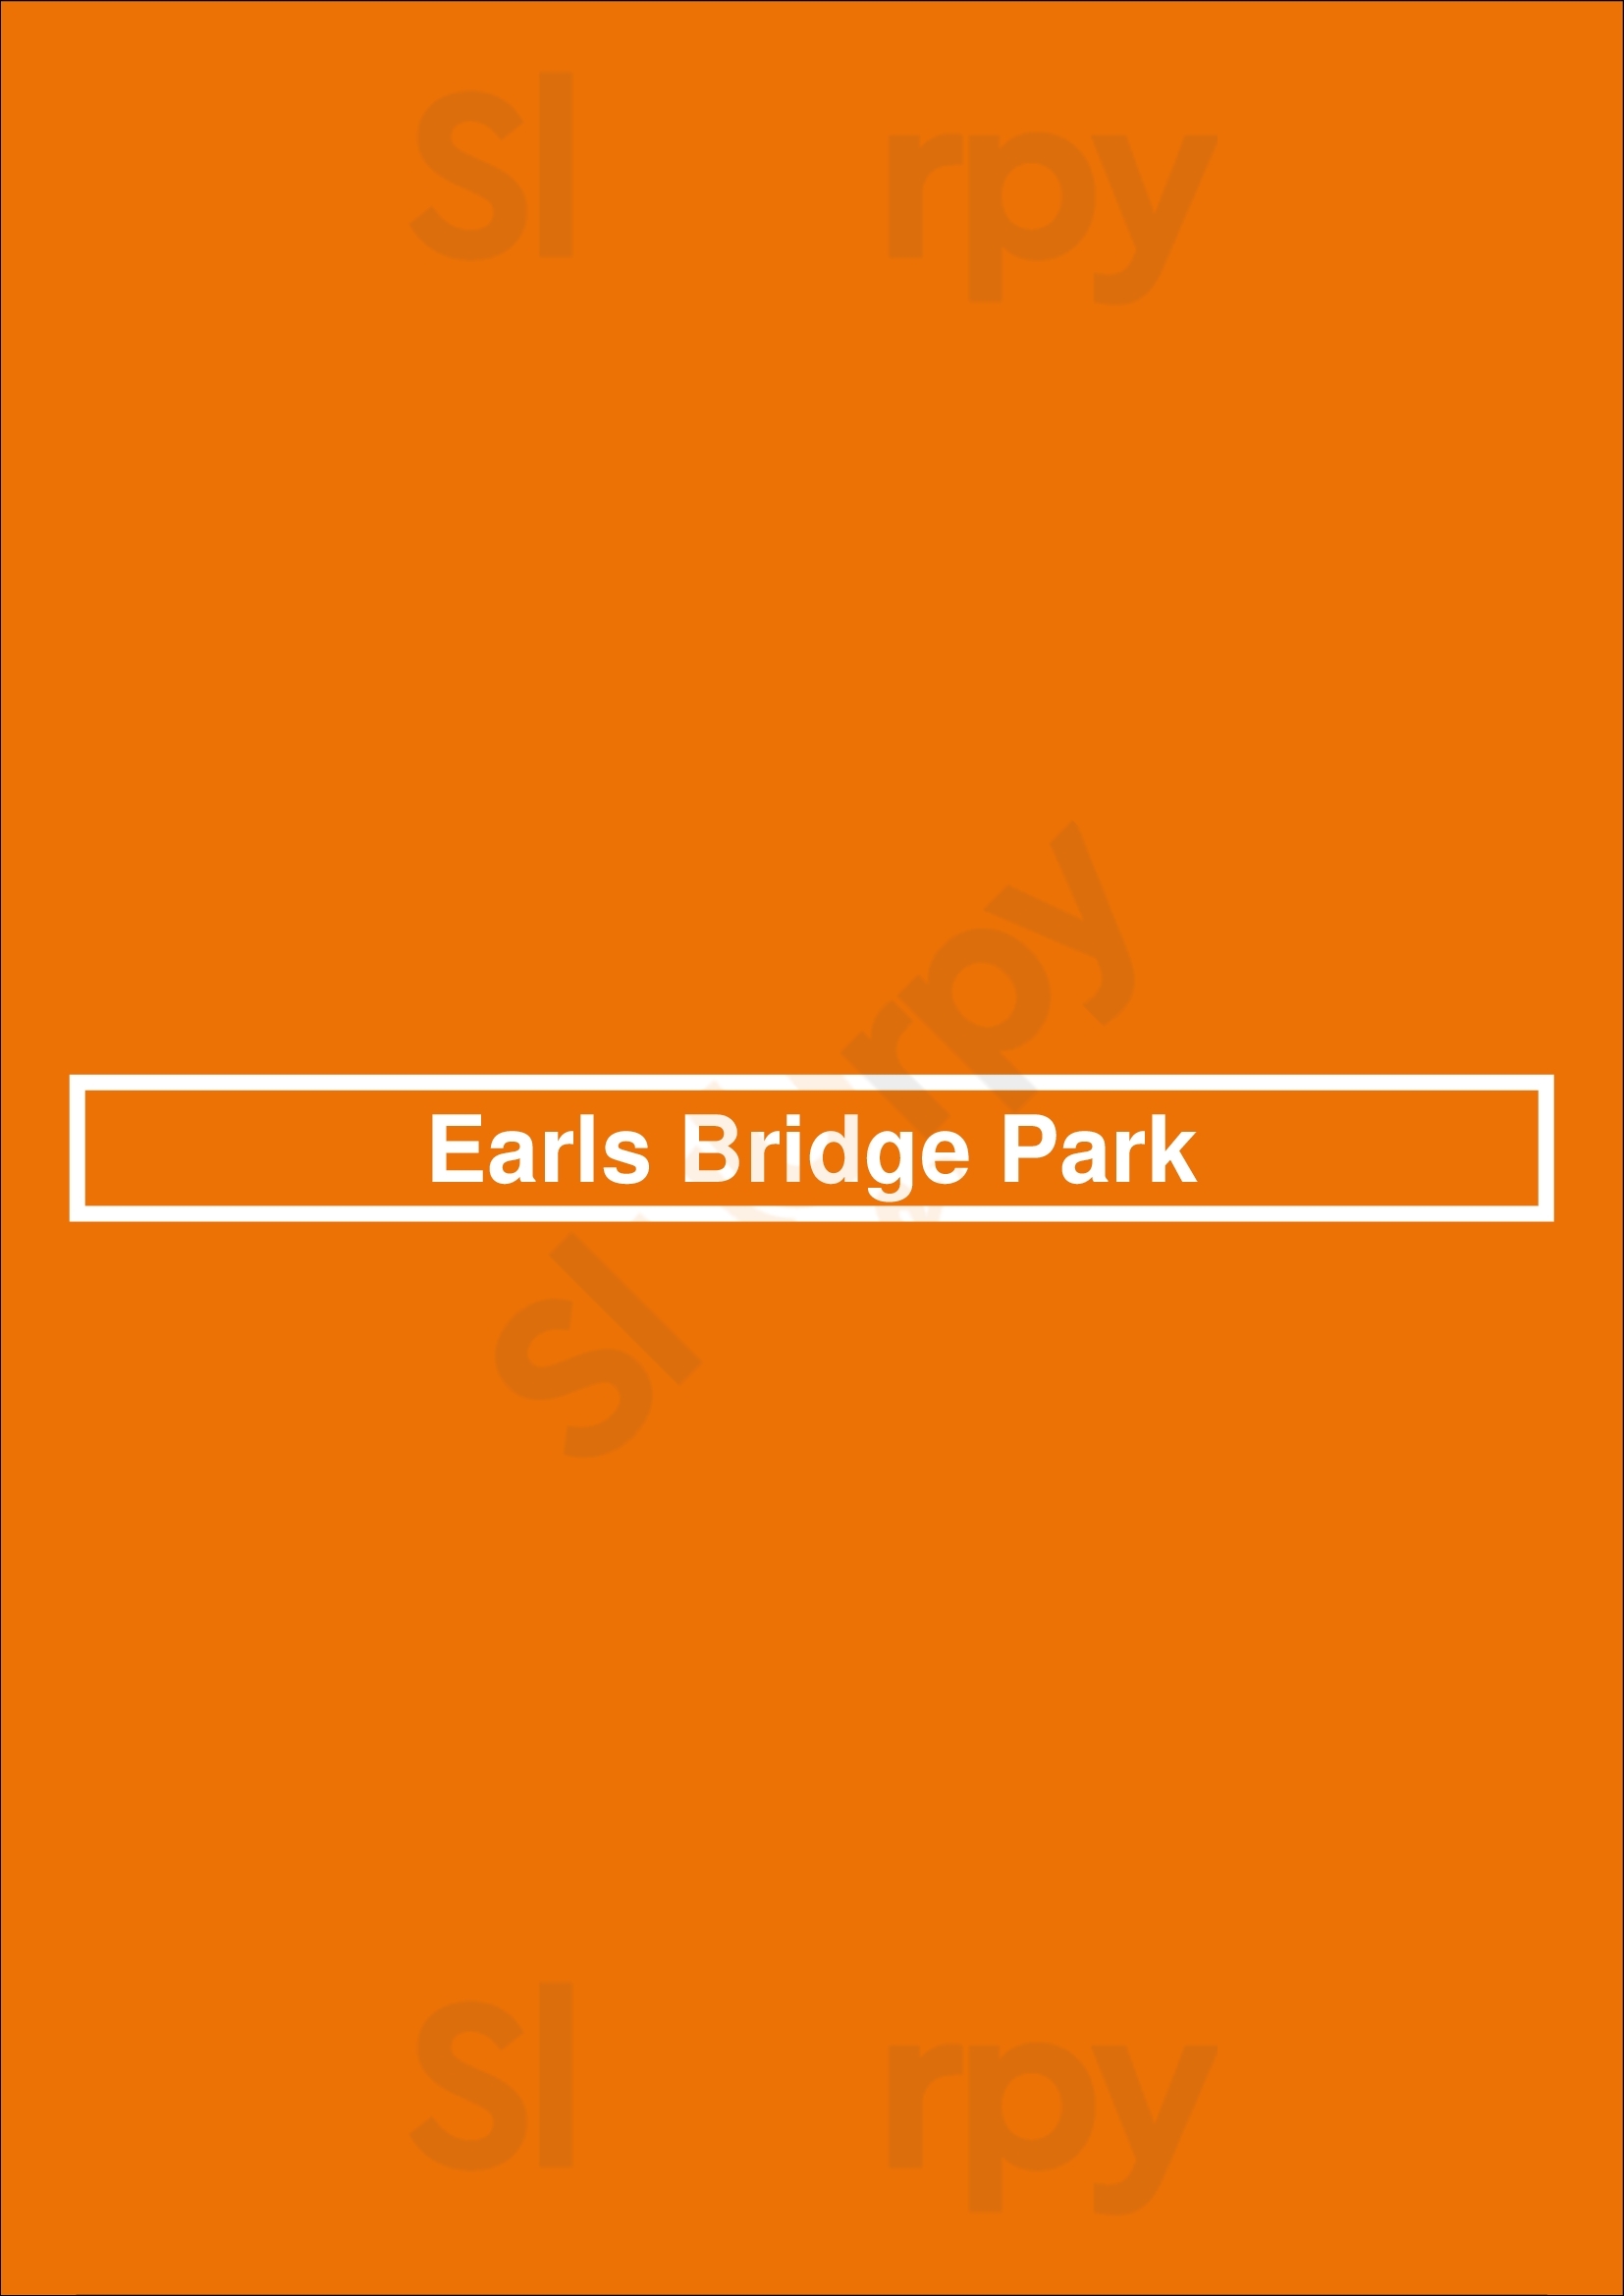 Earls Bridge Park Burnaby Menu - 1